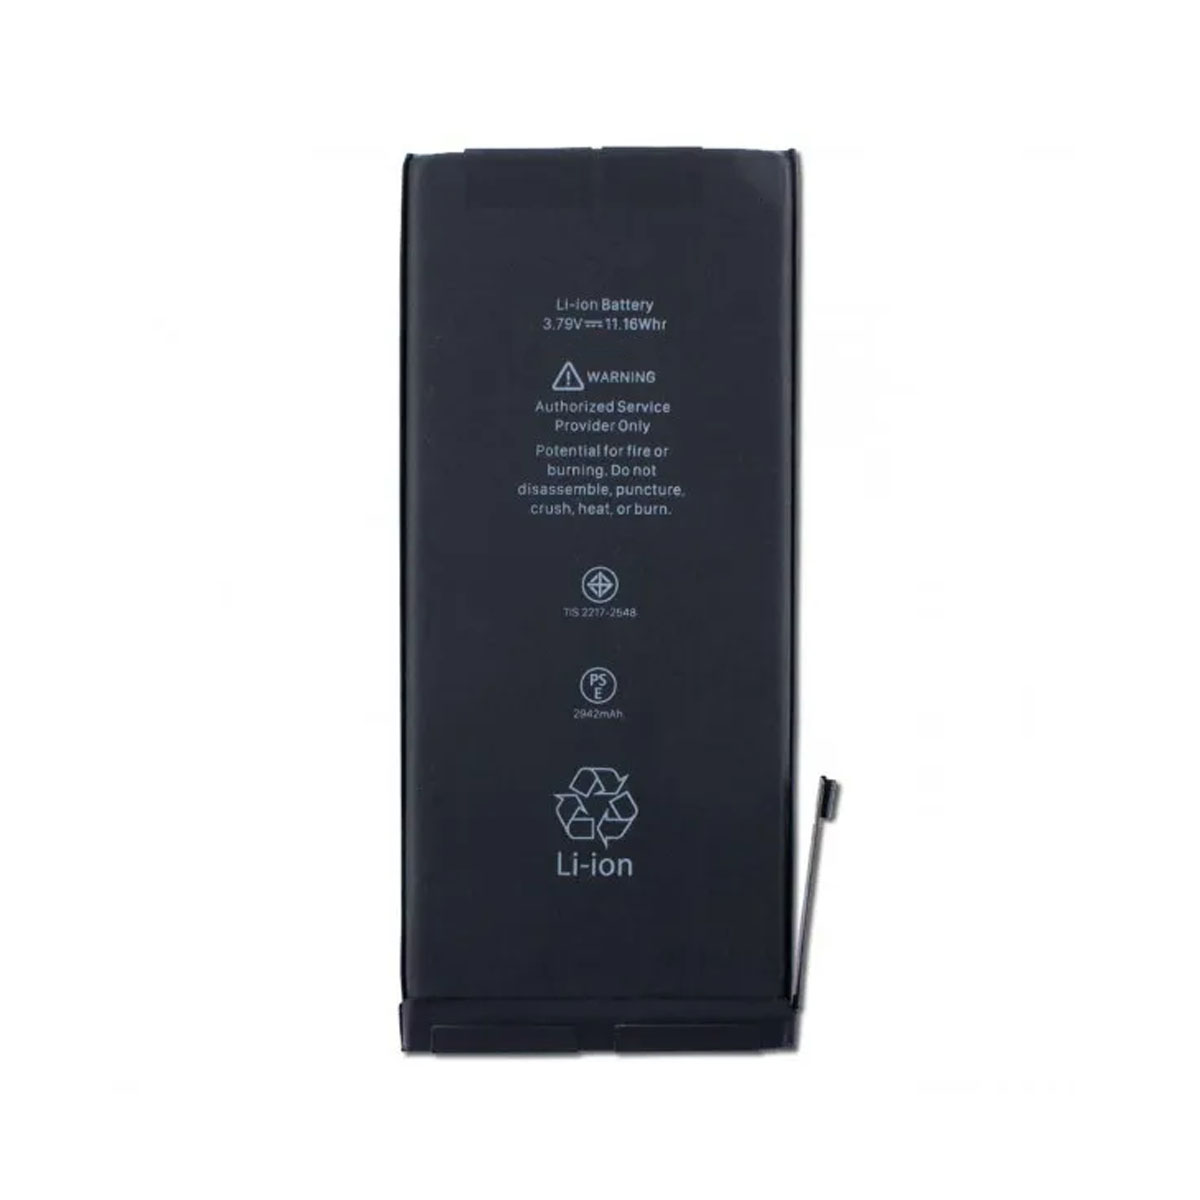 АКБ (Аккумулятор) для APPLE iPhone XR, 3510 mAh, цвет черный